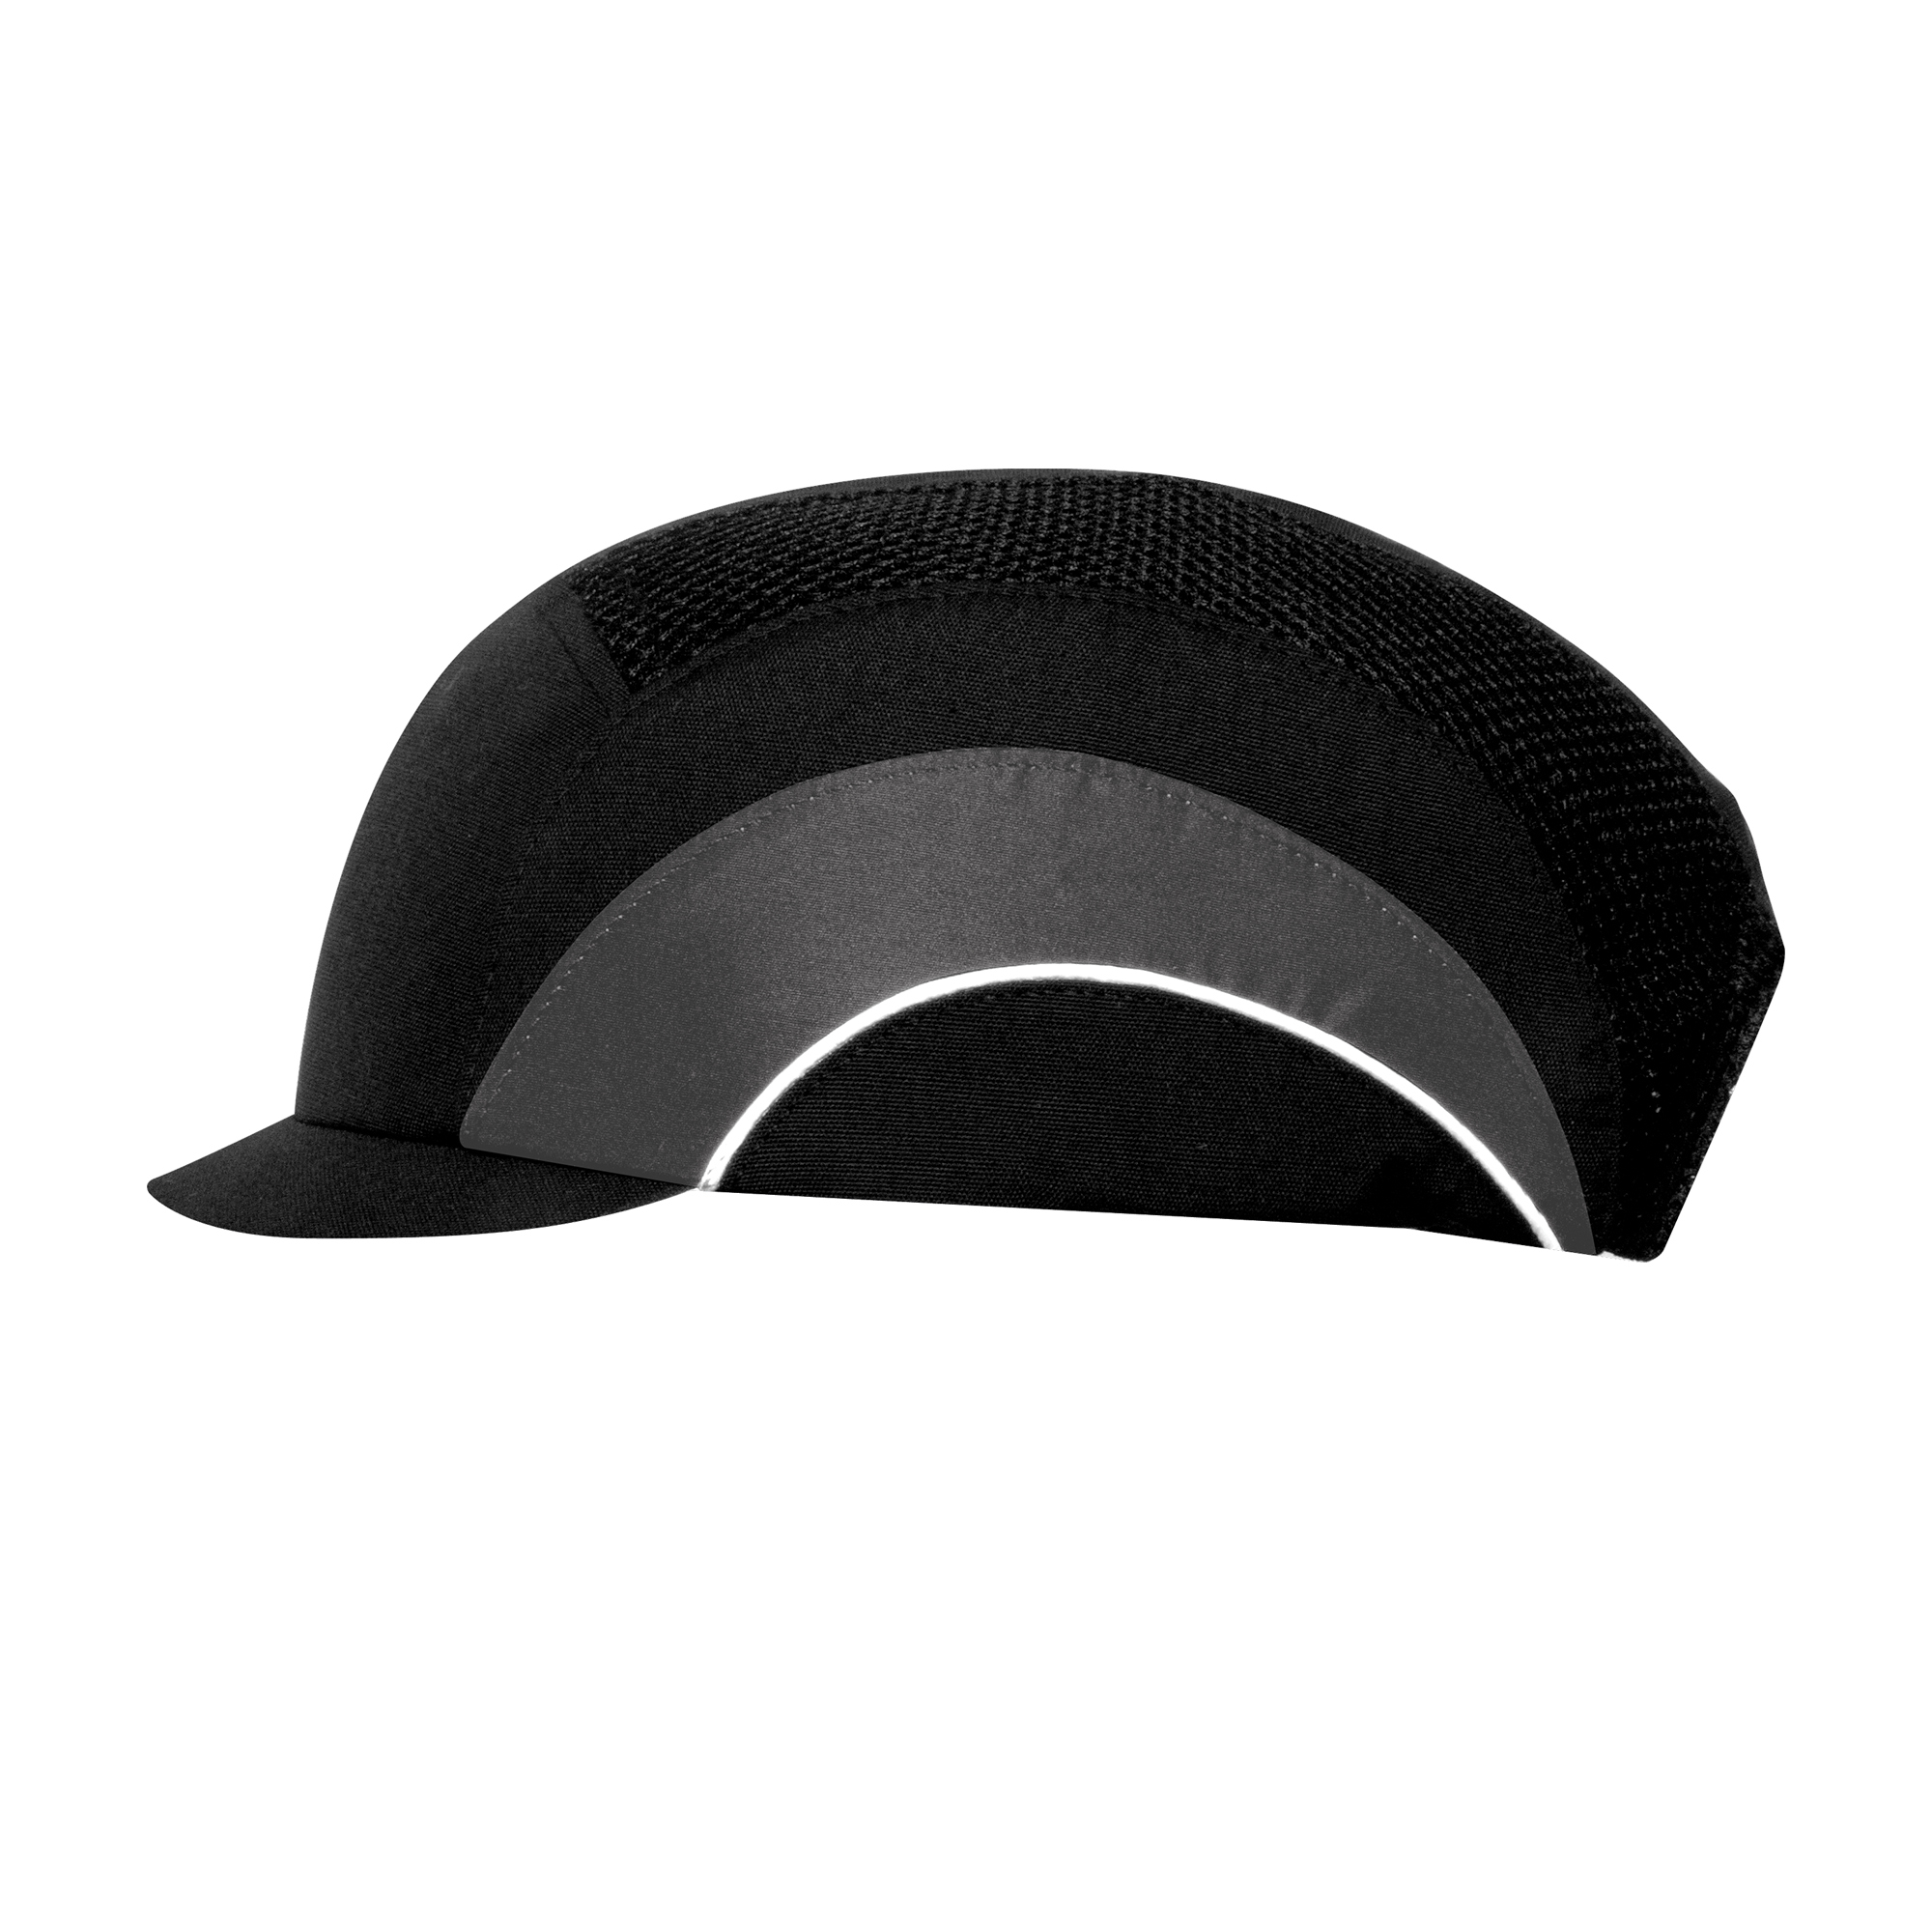 Hardcap™ A1+ Bump Cap - 2.5cm Peak - Black / Grey